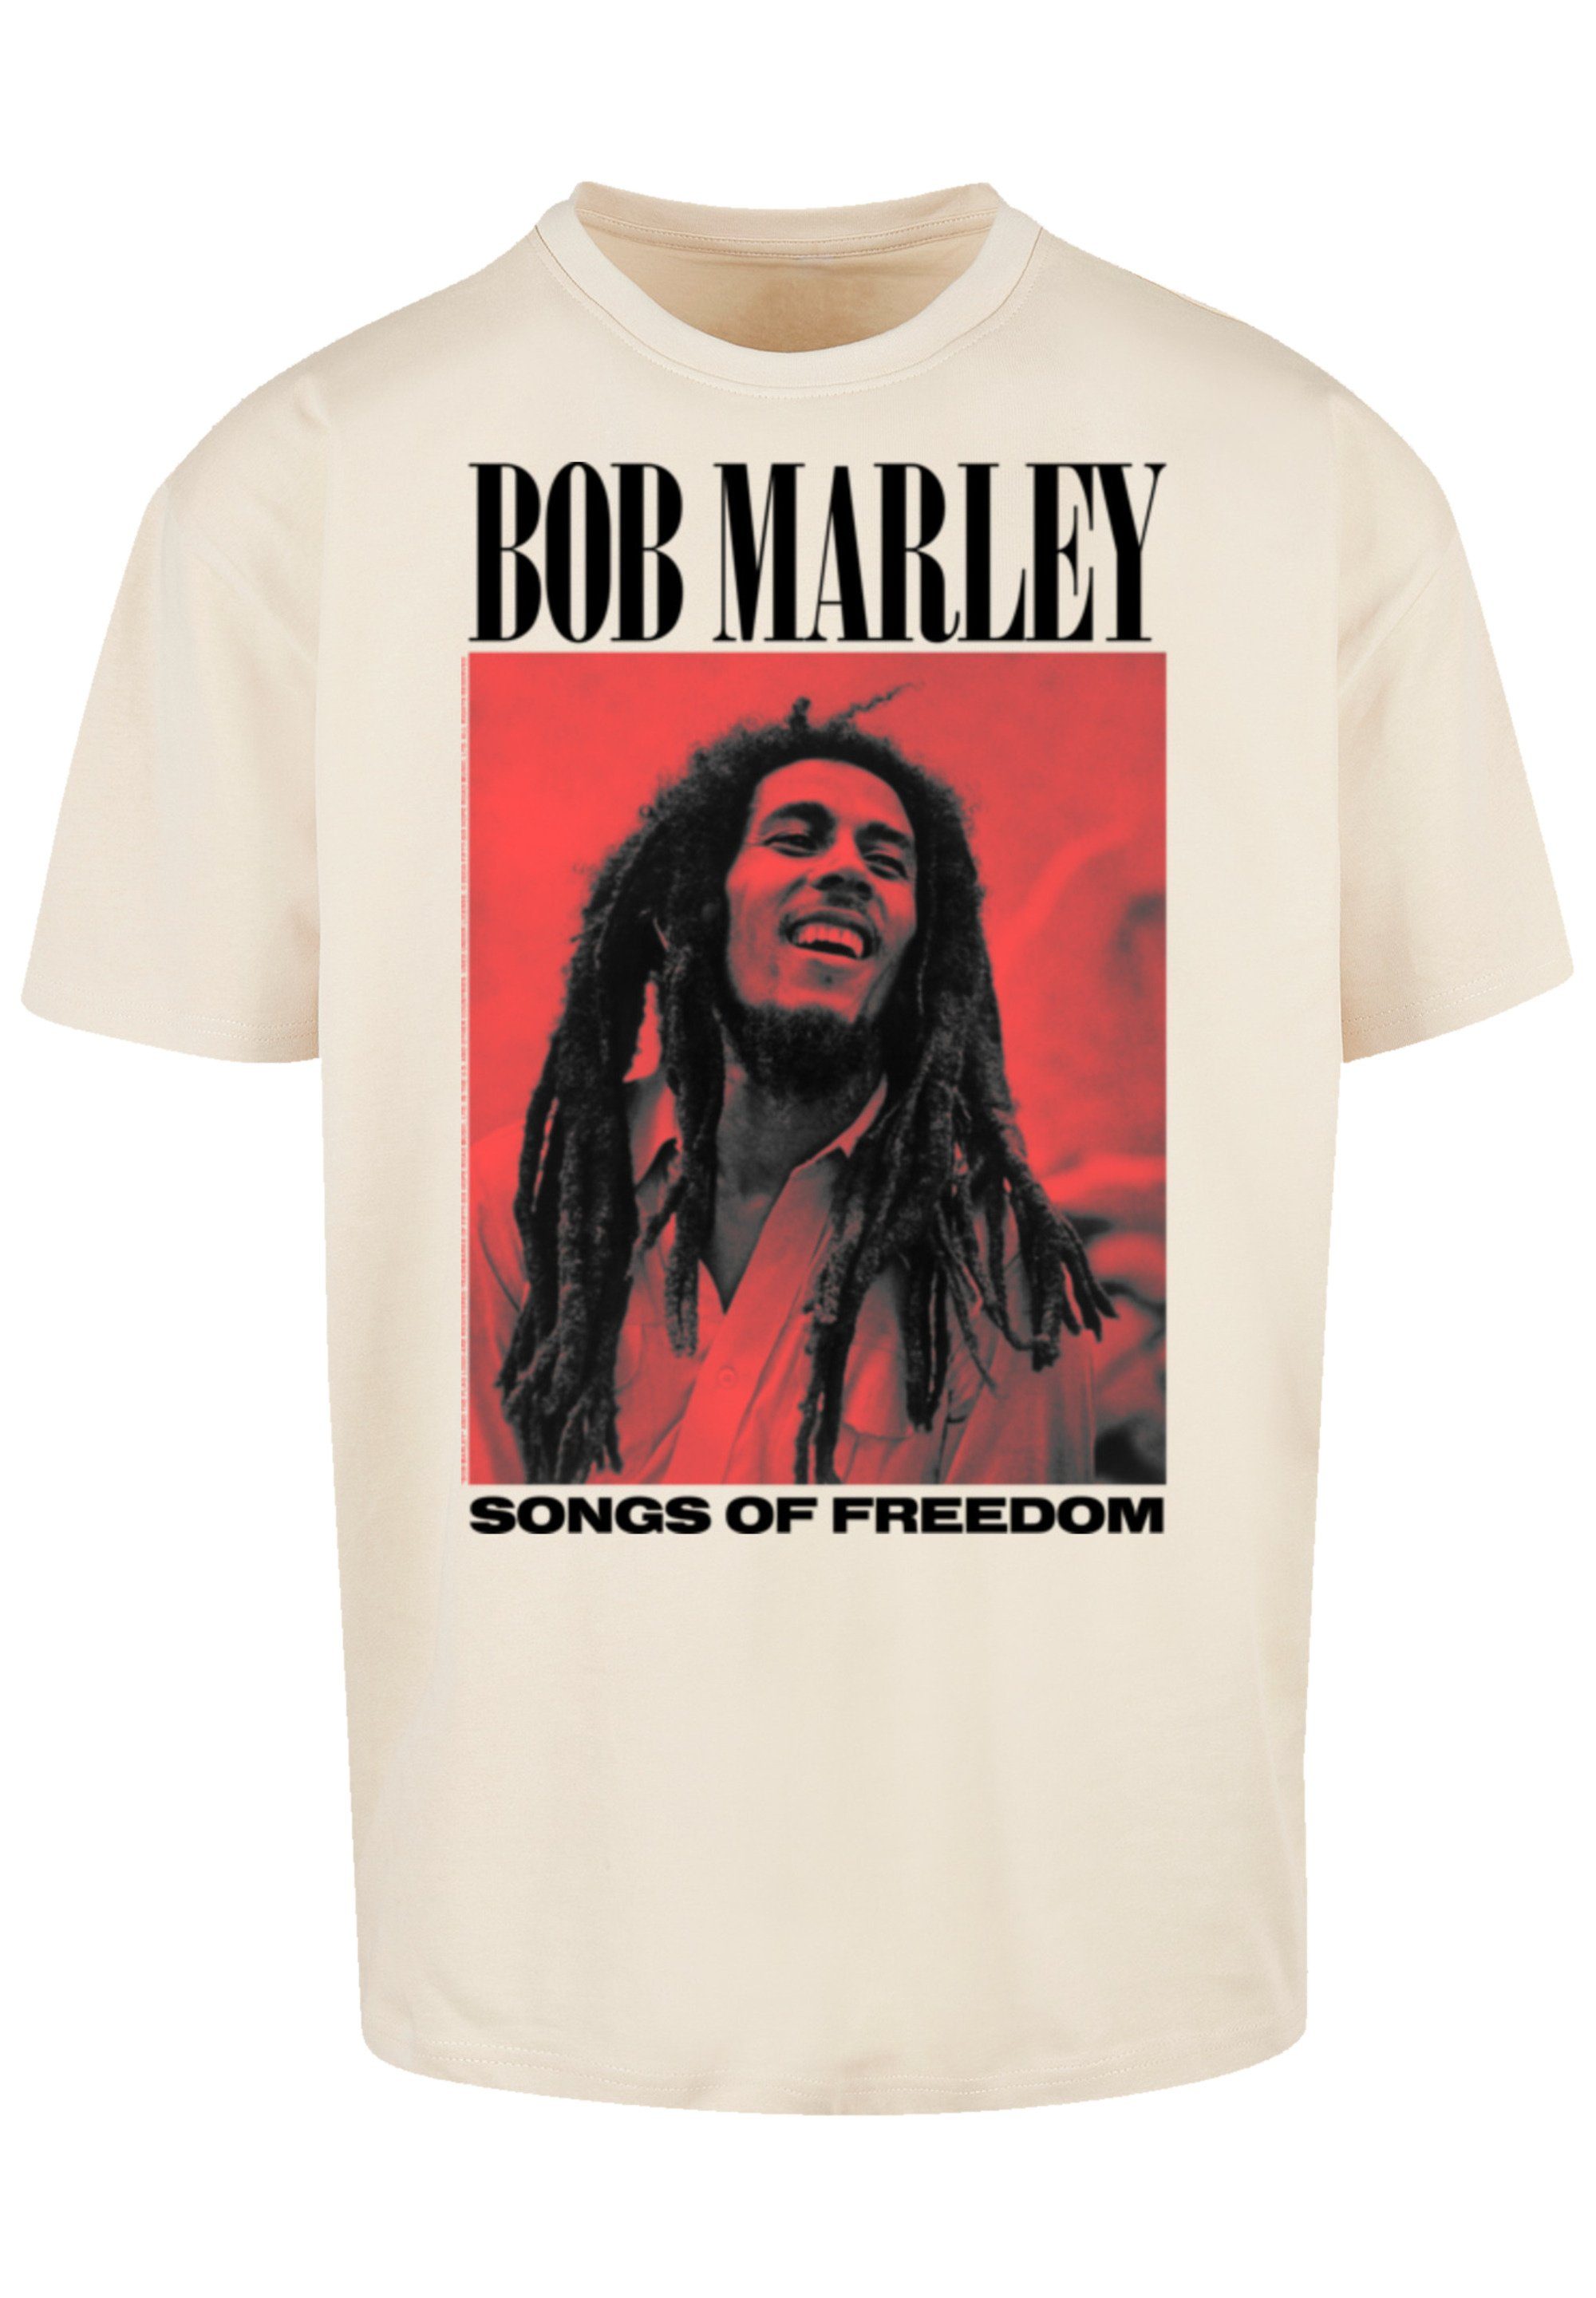 Bob By Music Qualität, Rock Of F4NT4STIC Off Freedom Musik, sand Songs Premium T-Shirt Reggae Marley